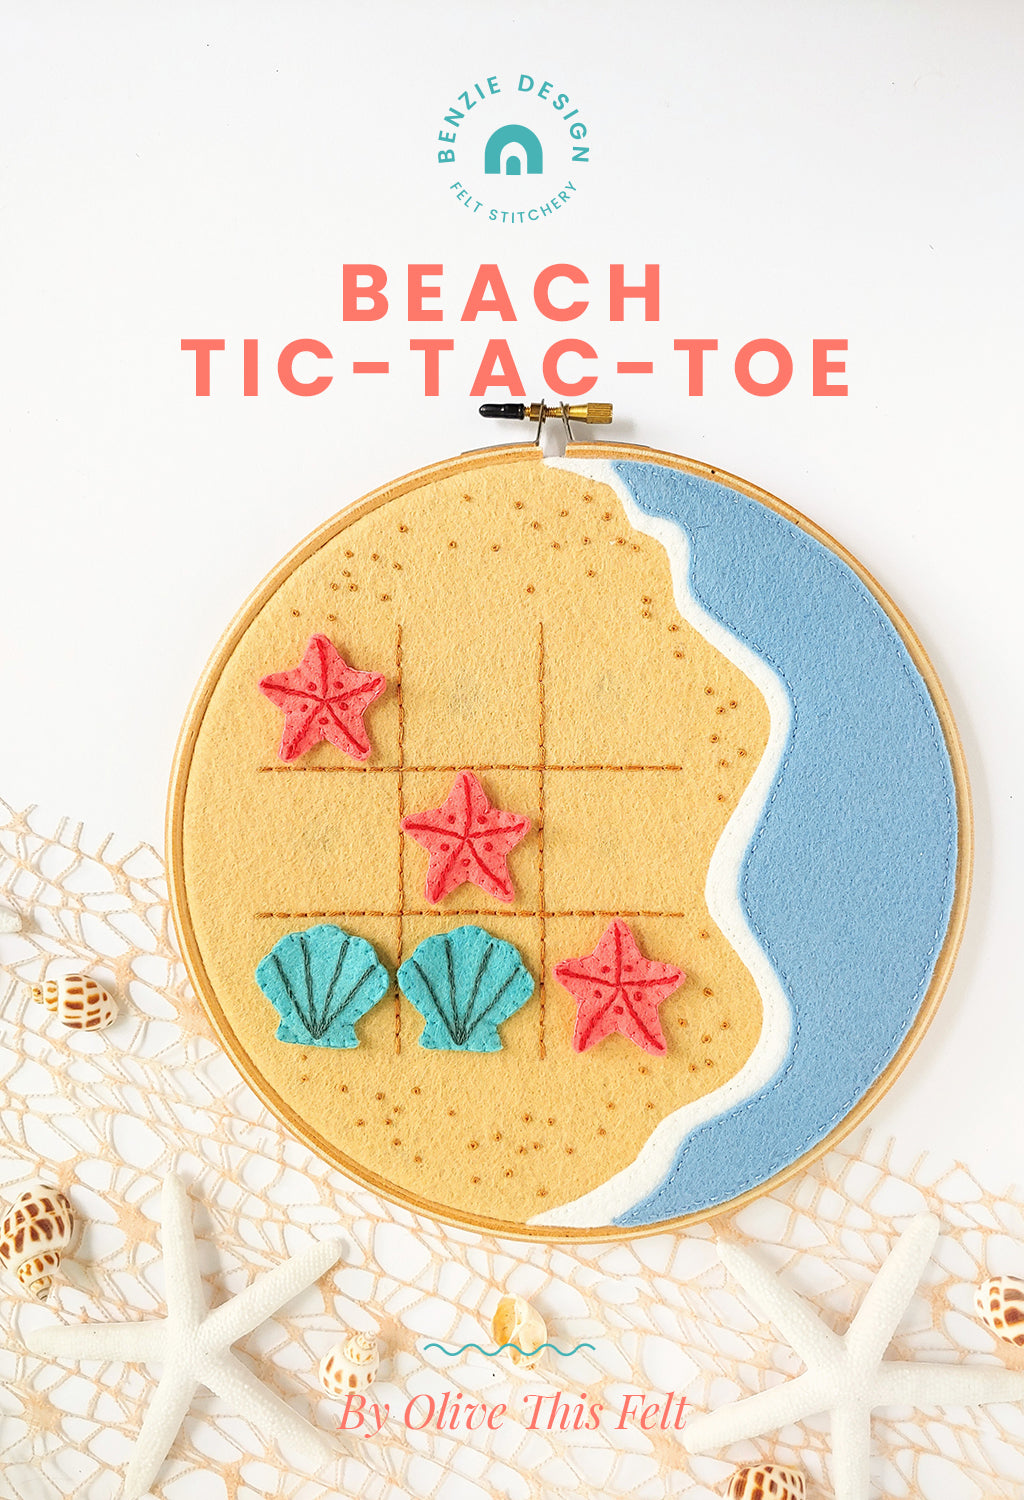 Beach Ti-Tac-Toe tutorial